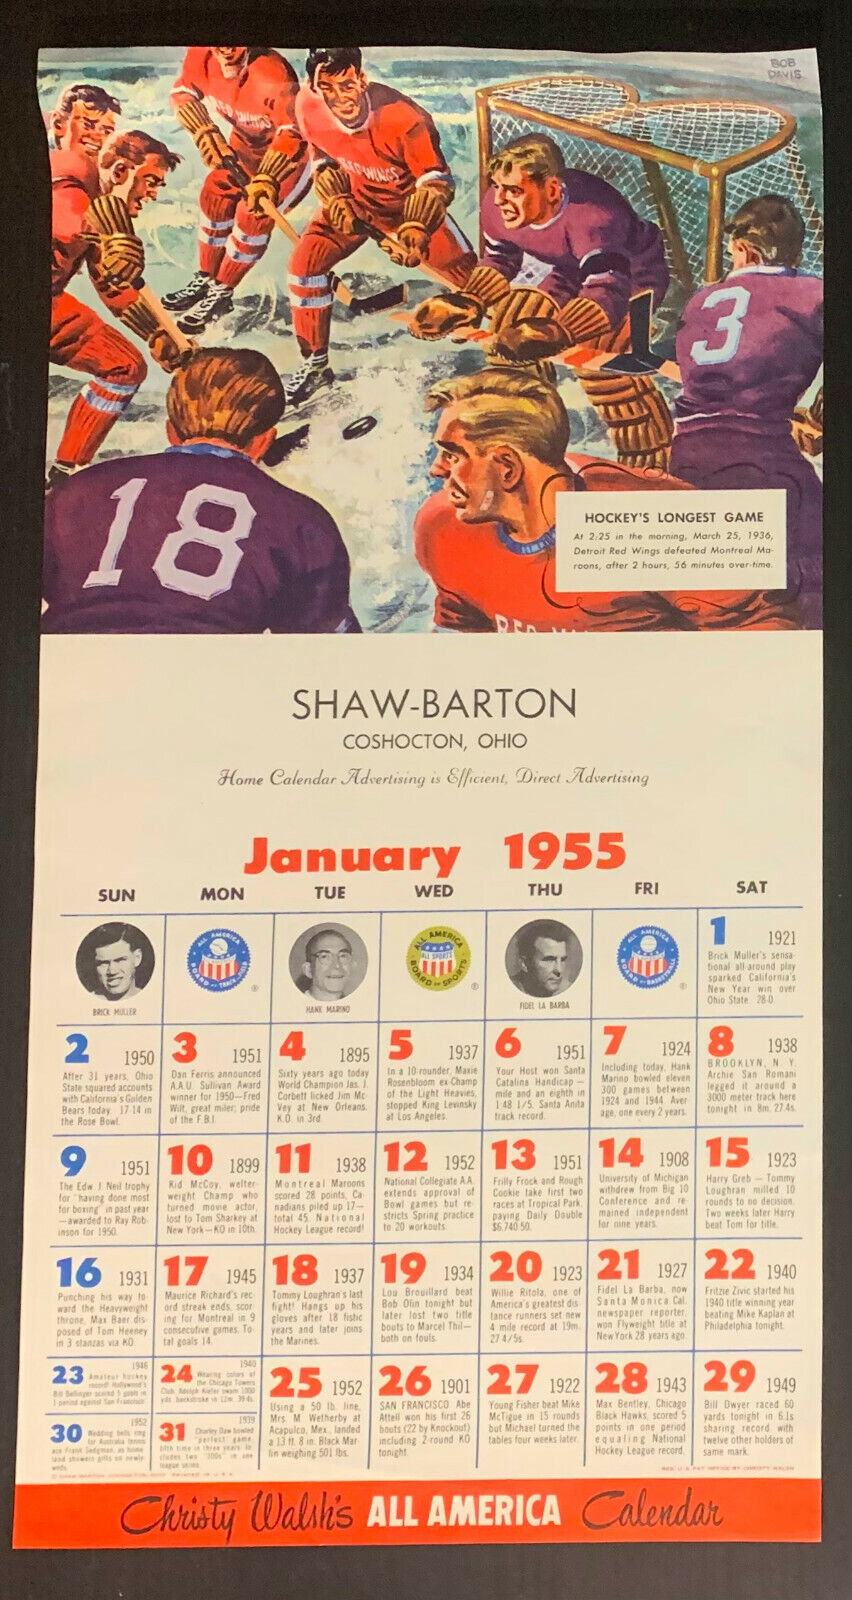 01/1955 Christy Walsh's All America Calendar Celebrates Hockey's Longest Game